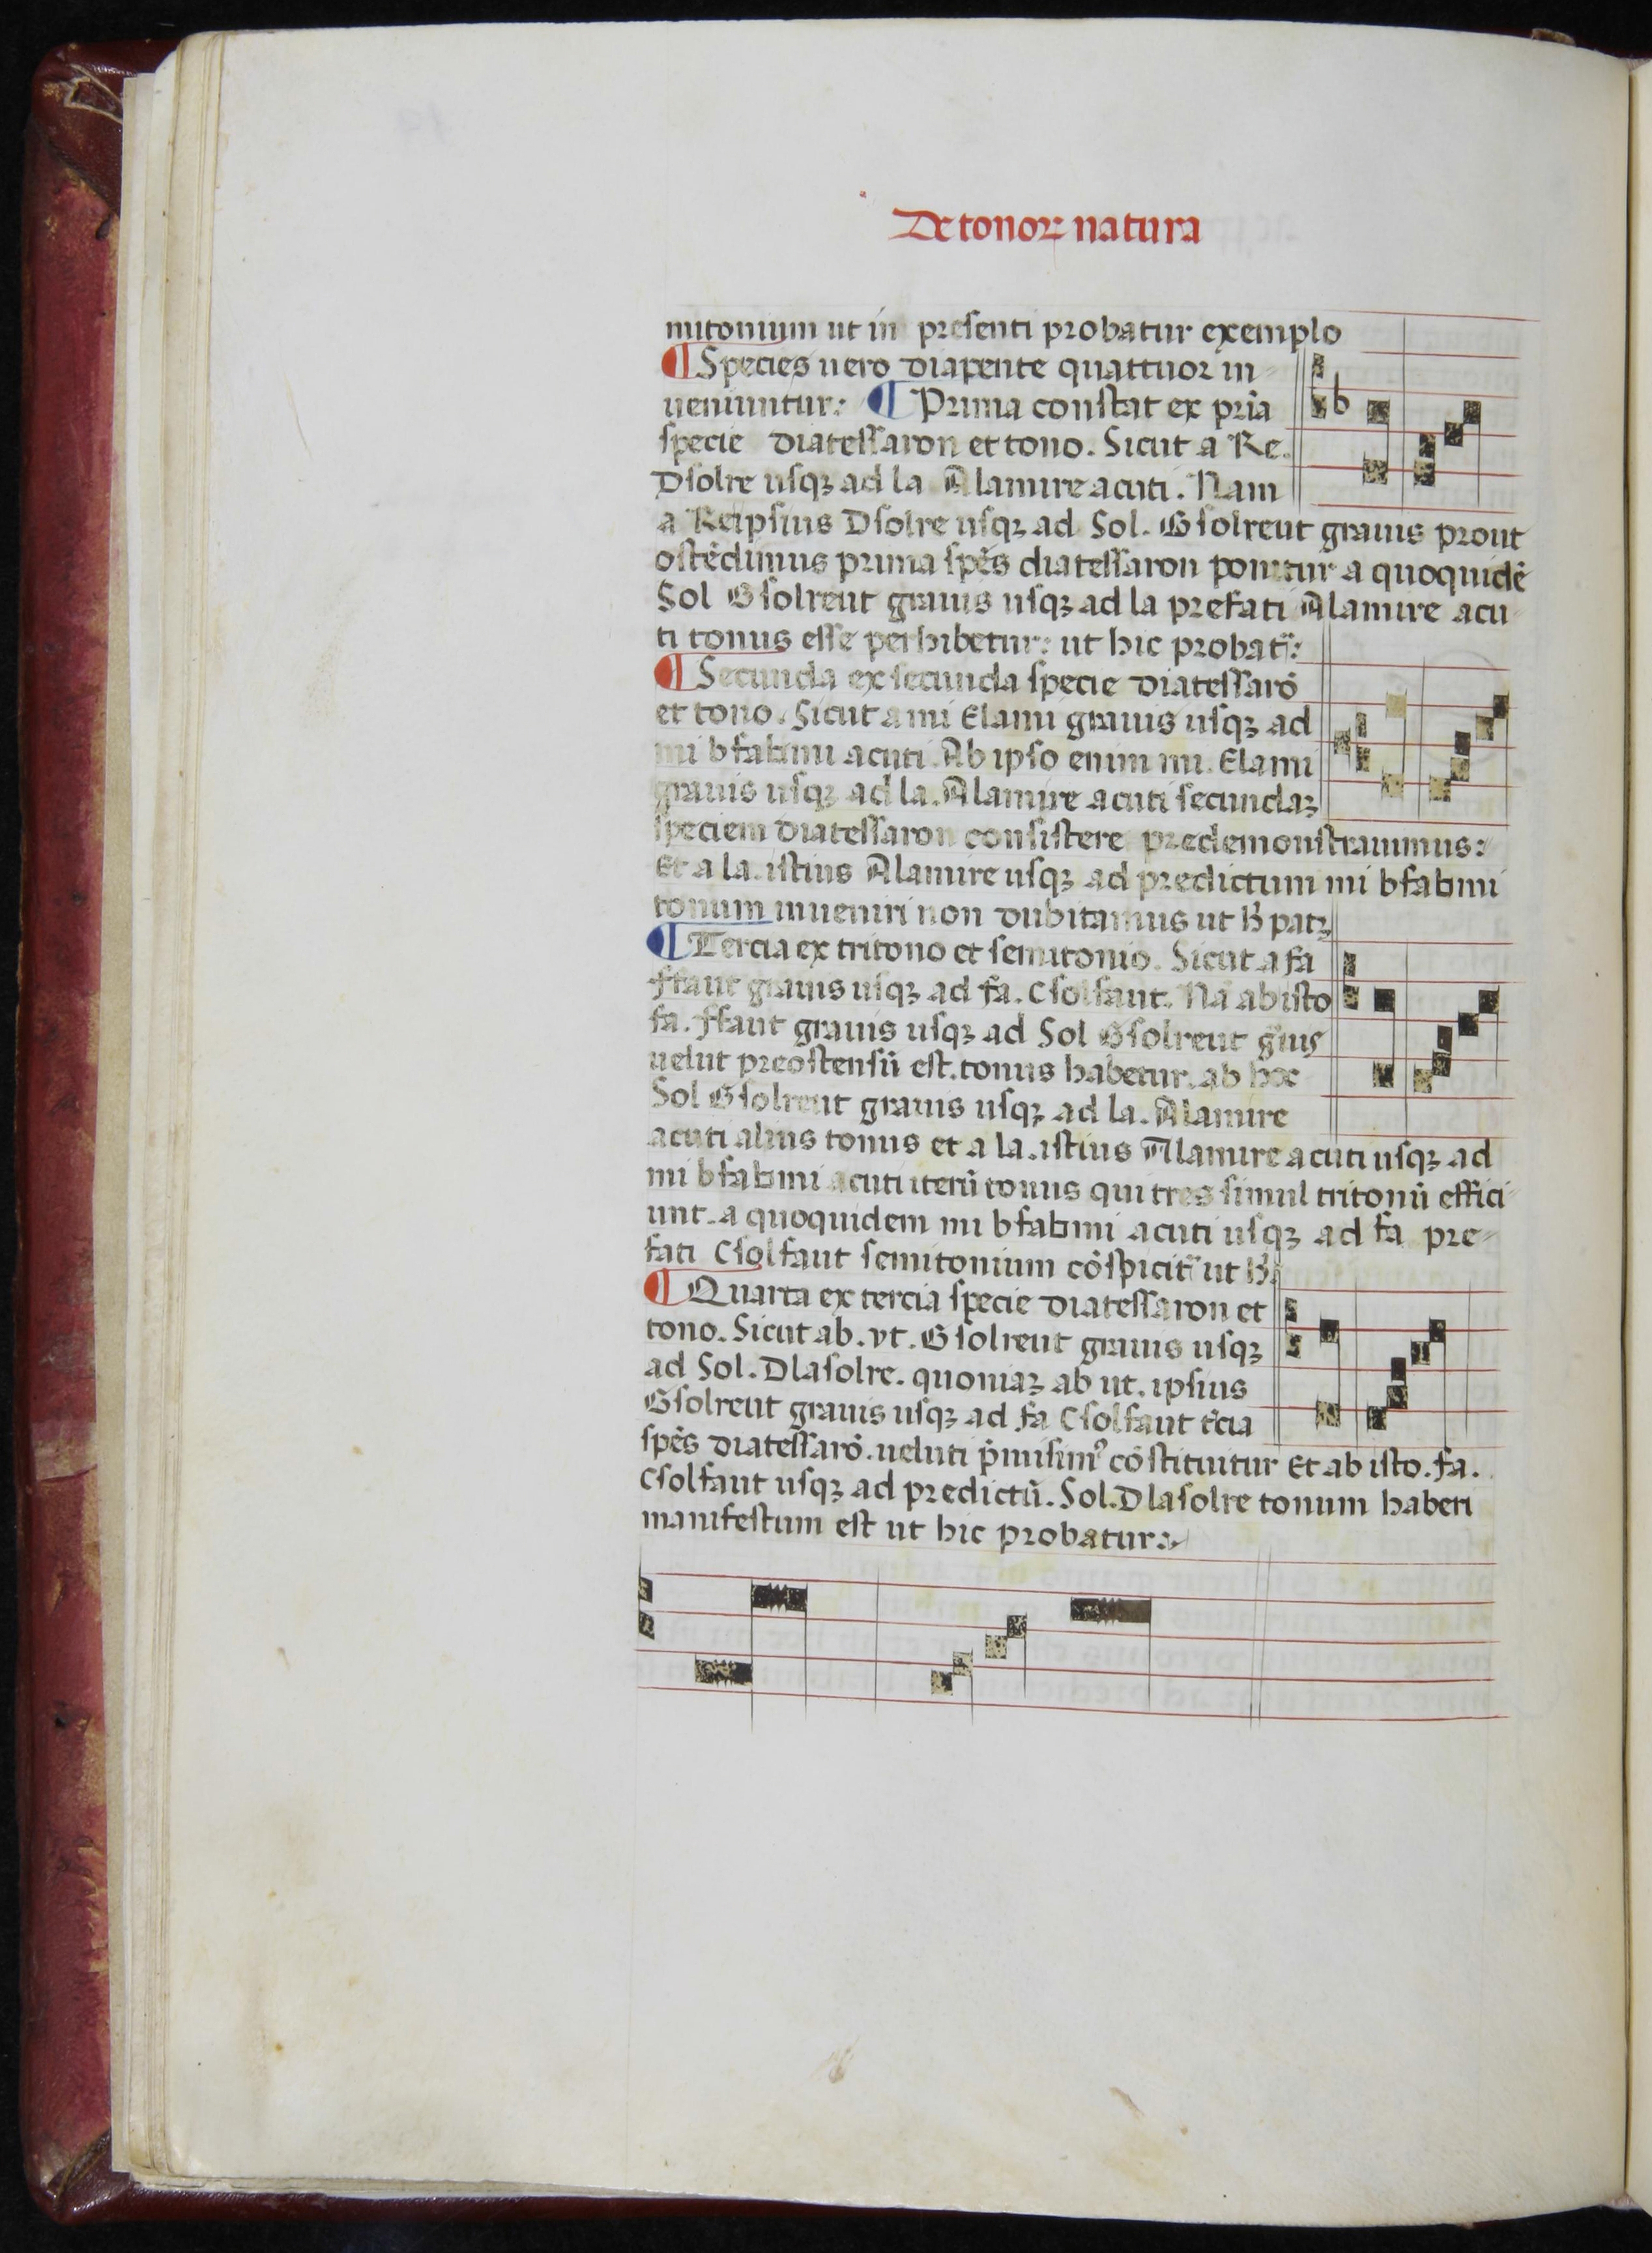 Universitat de València, Biblioteca Històrica, MS 835 [olim 844], fol. 19v. Source: Universitat de València, Biblioteca Històrica.